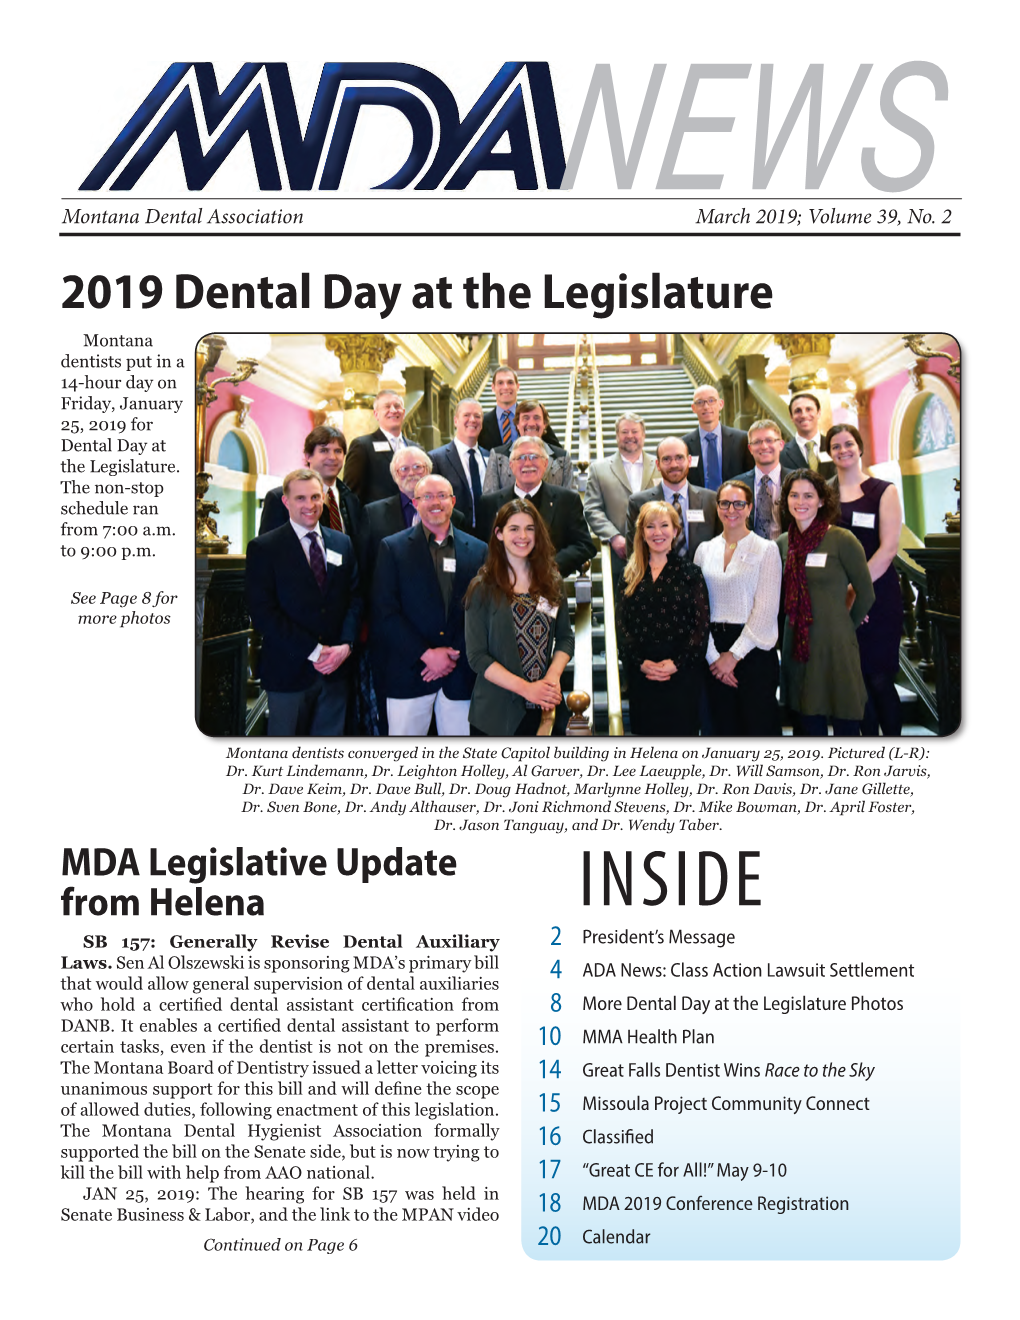 MDA Newsletter, March 2019